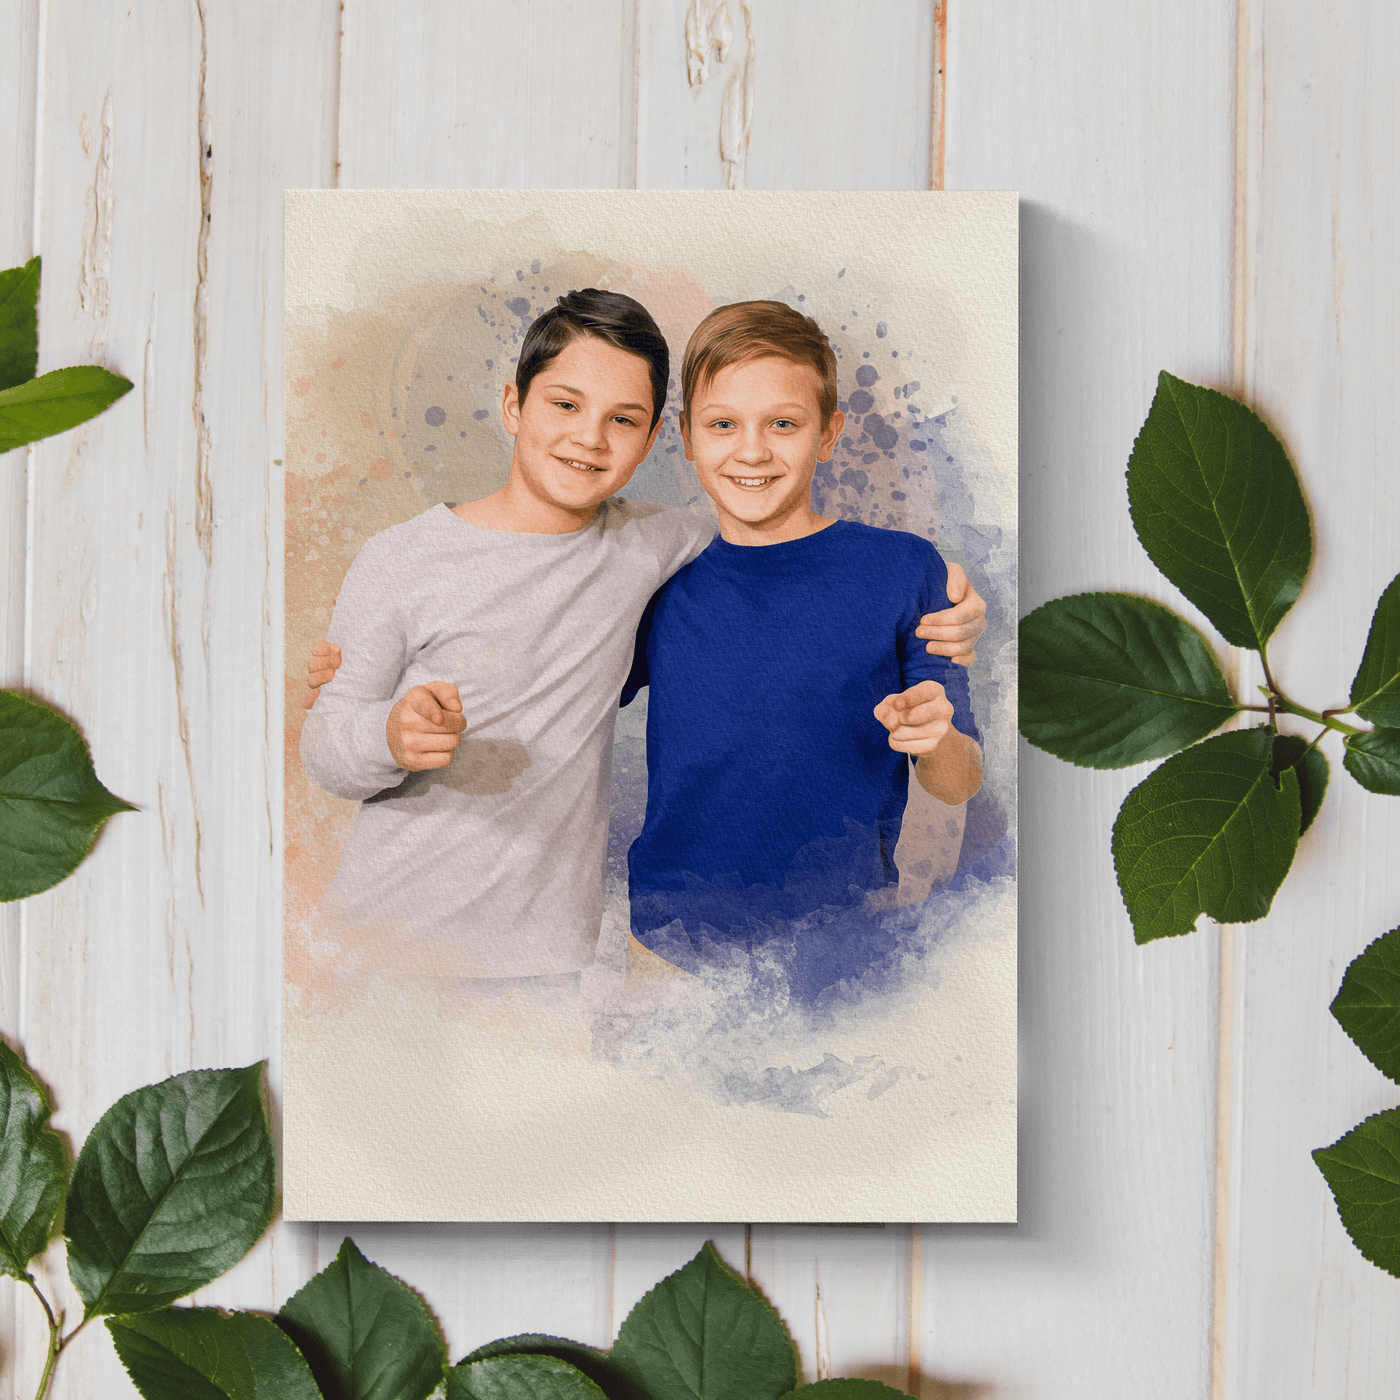 watercolor children portrait of a happy siblings